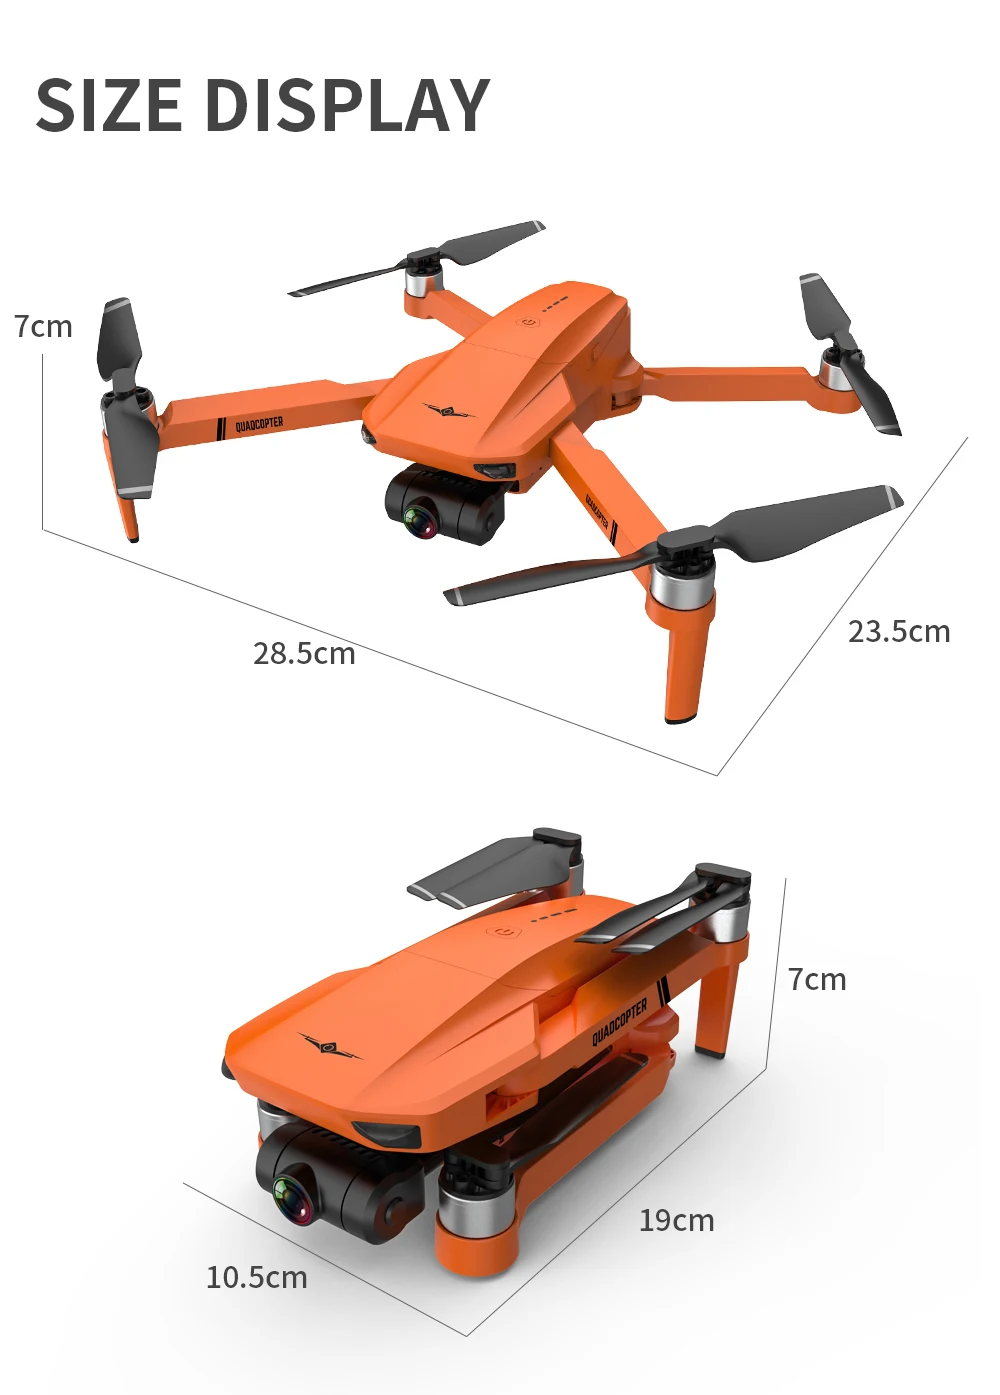 KF102 MAX GPS Drone, SIZE DISPLAY 7cm 23.Scm 28.5cm 7